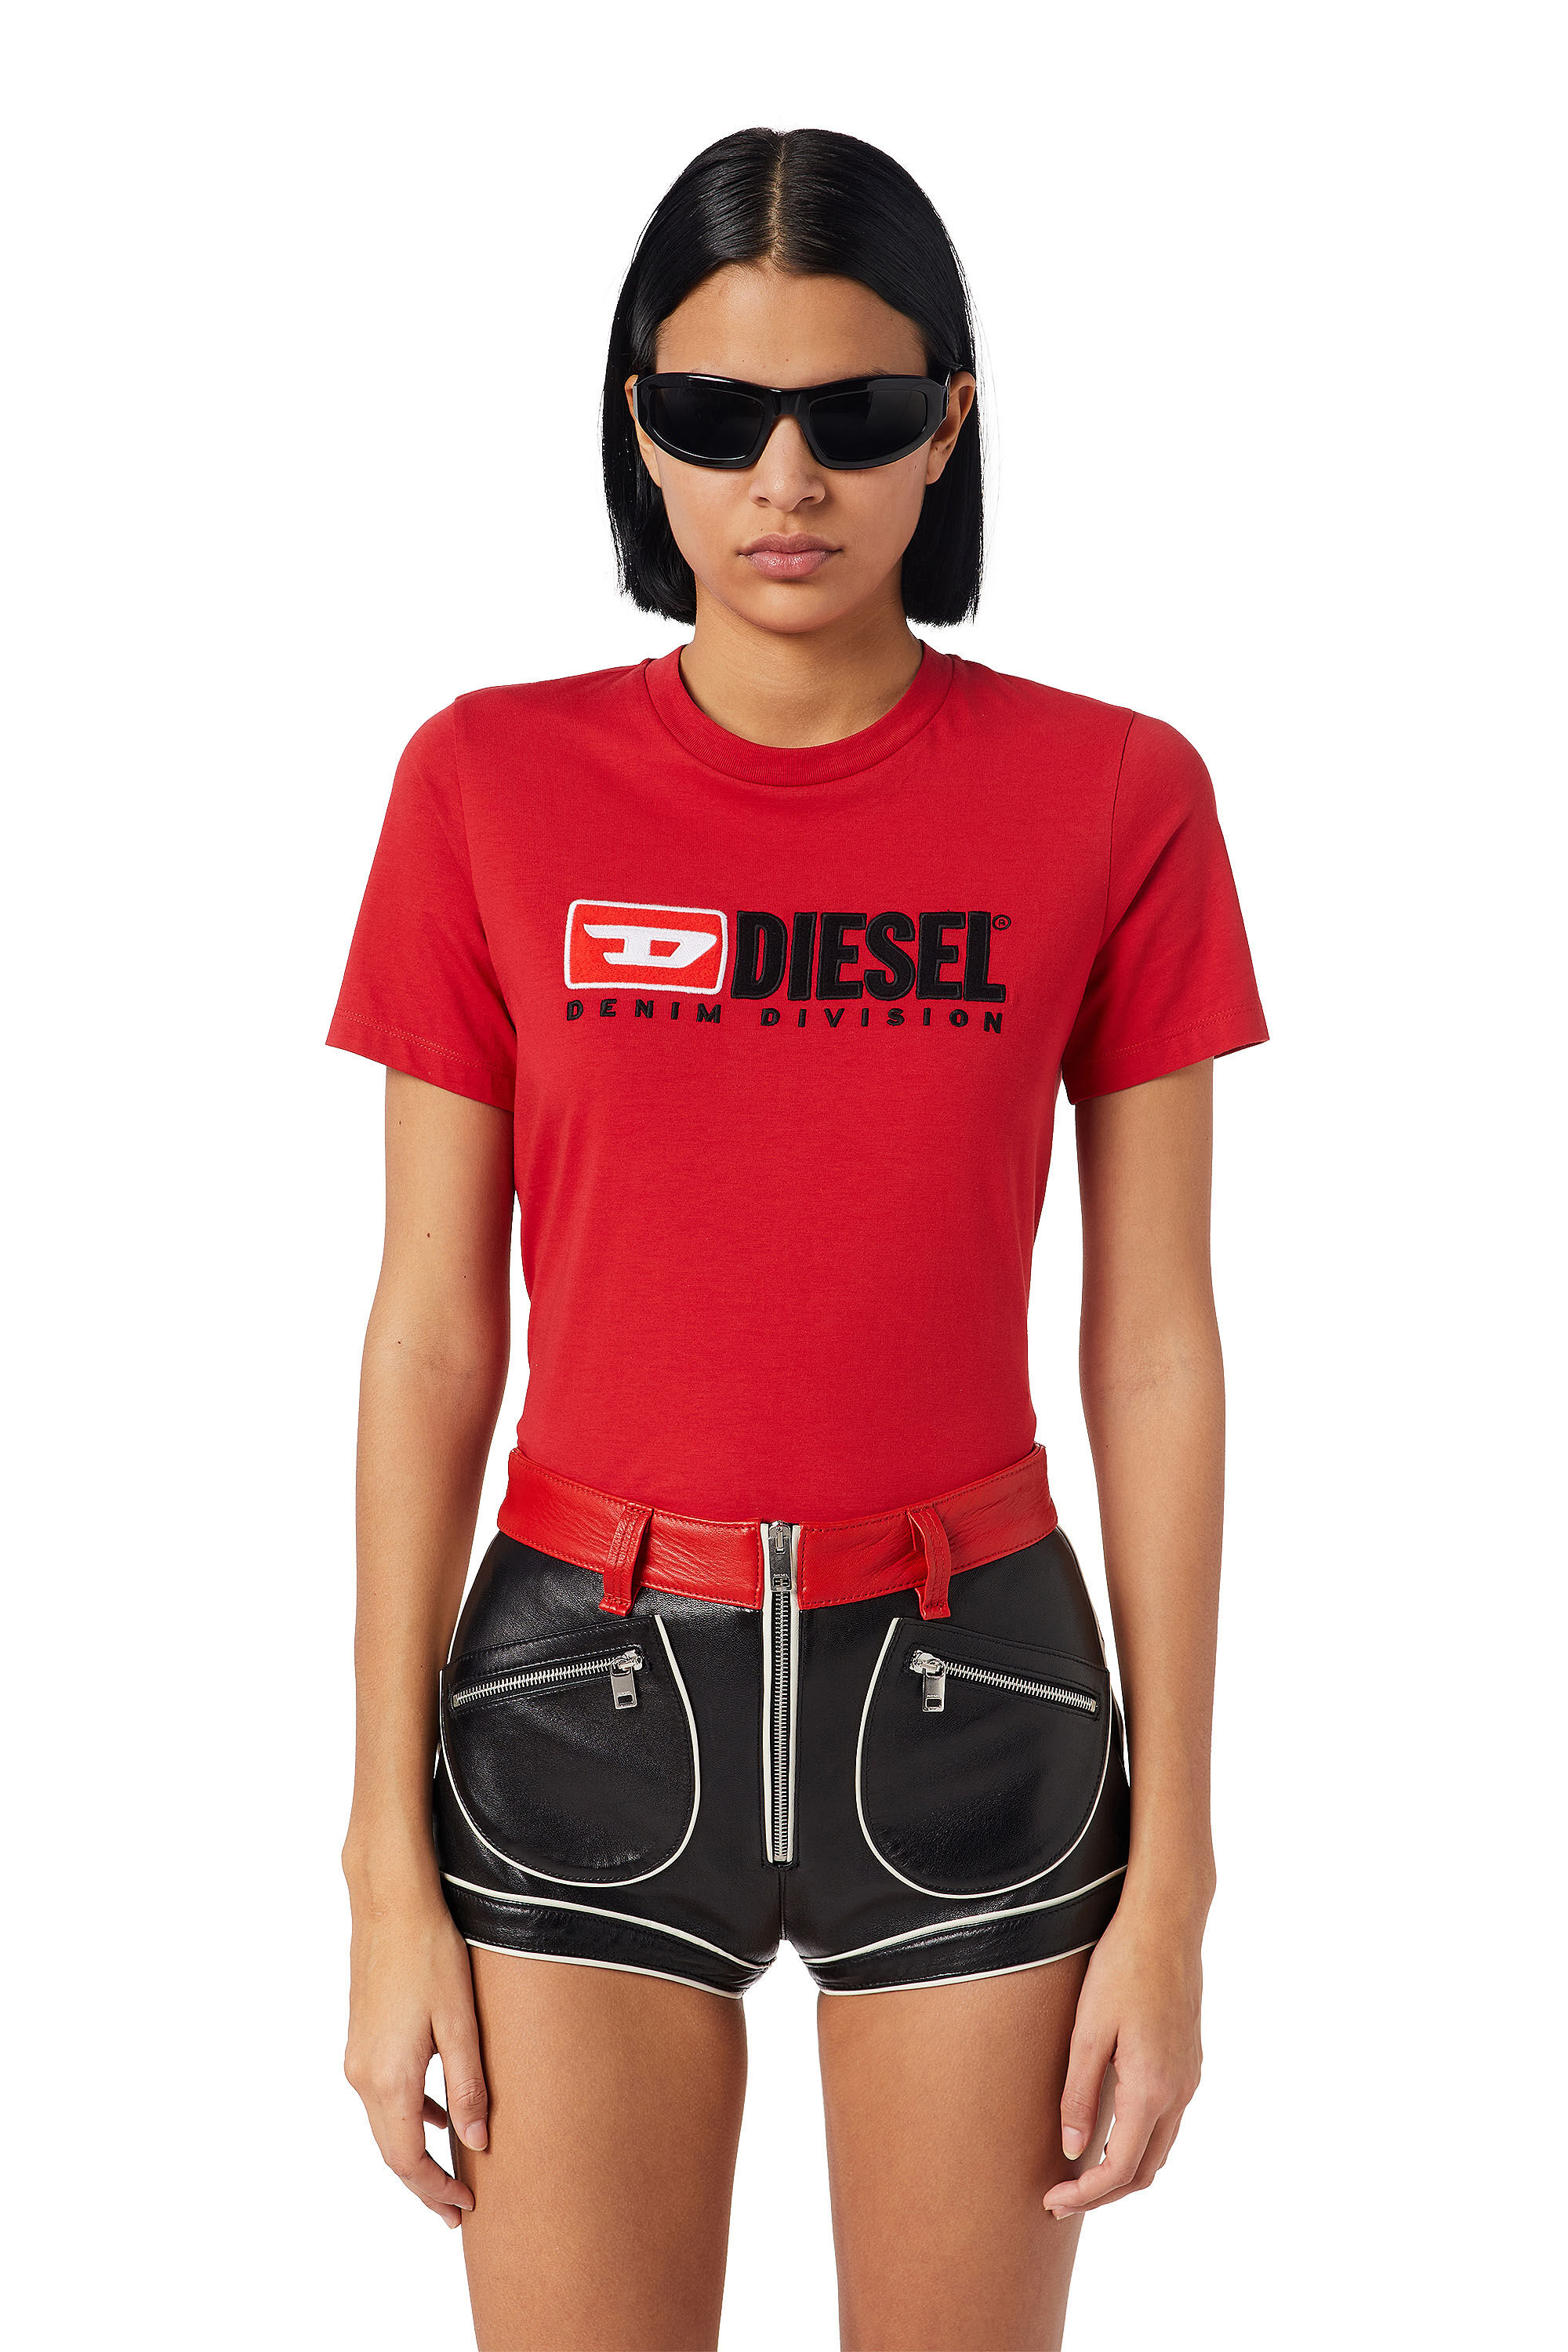 Diesel - T-REG-DIV, Red - Image 3